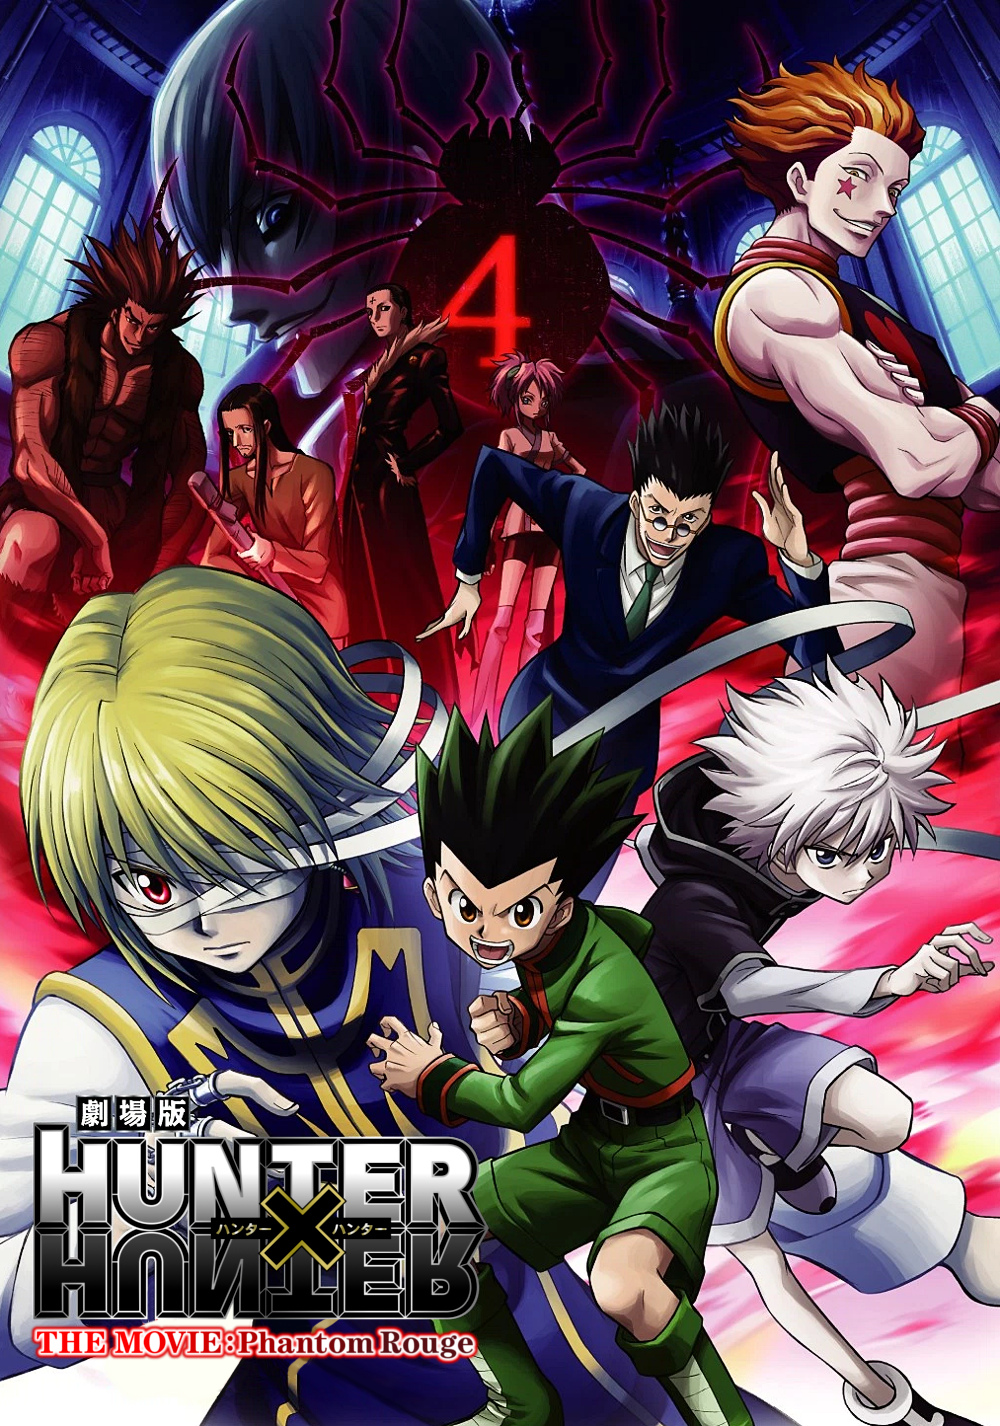 Hunter x Hunter (Dubbed) - Season 1 (2011) Television